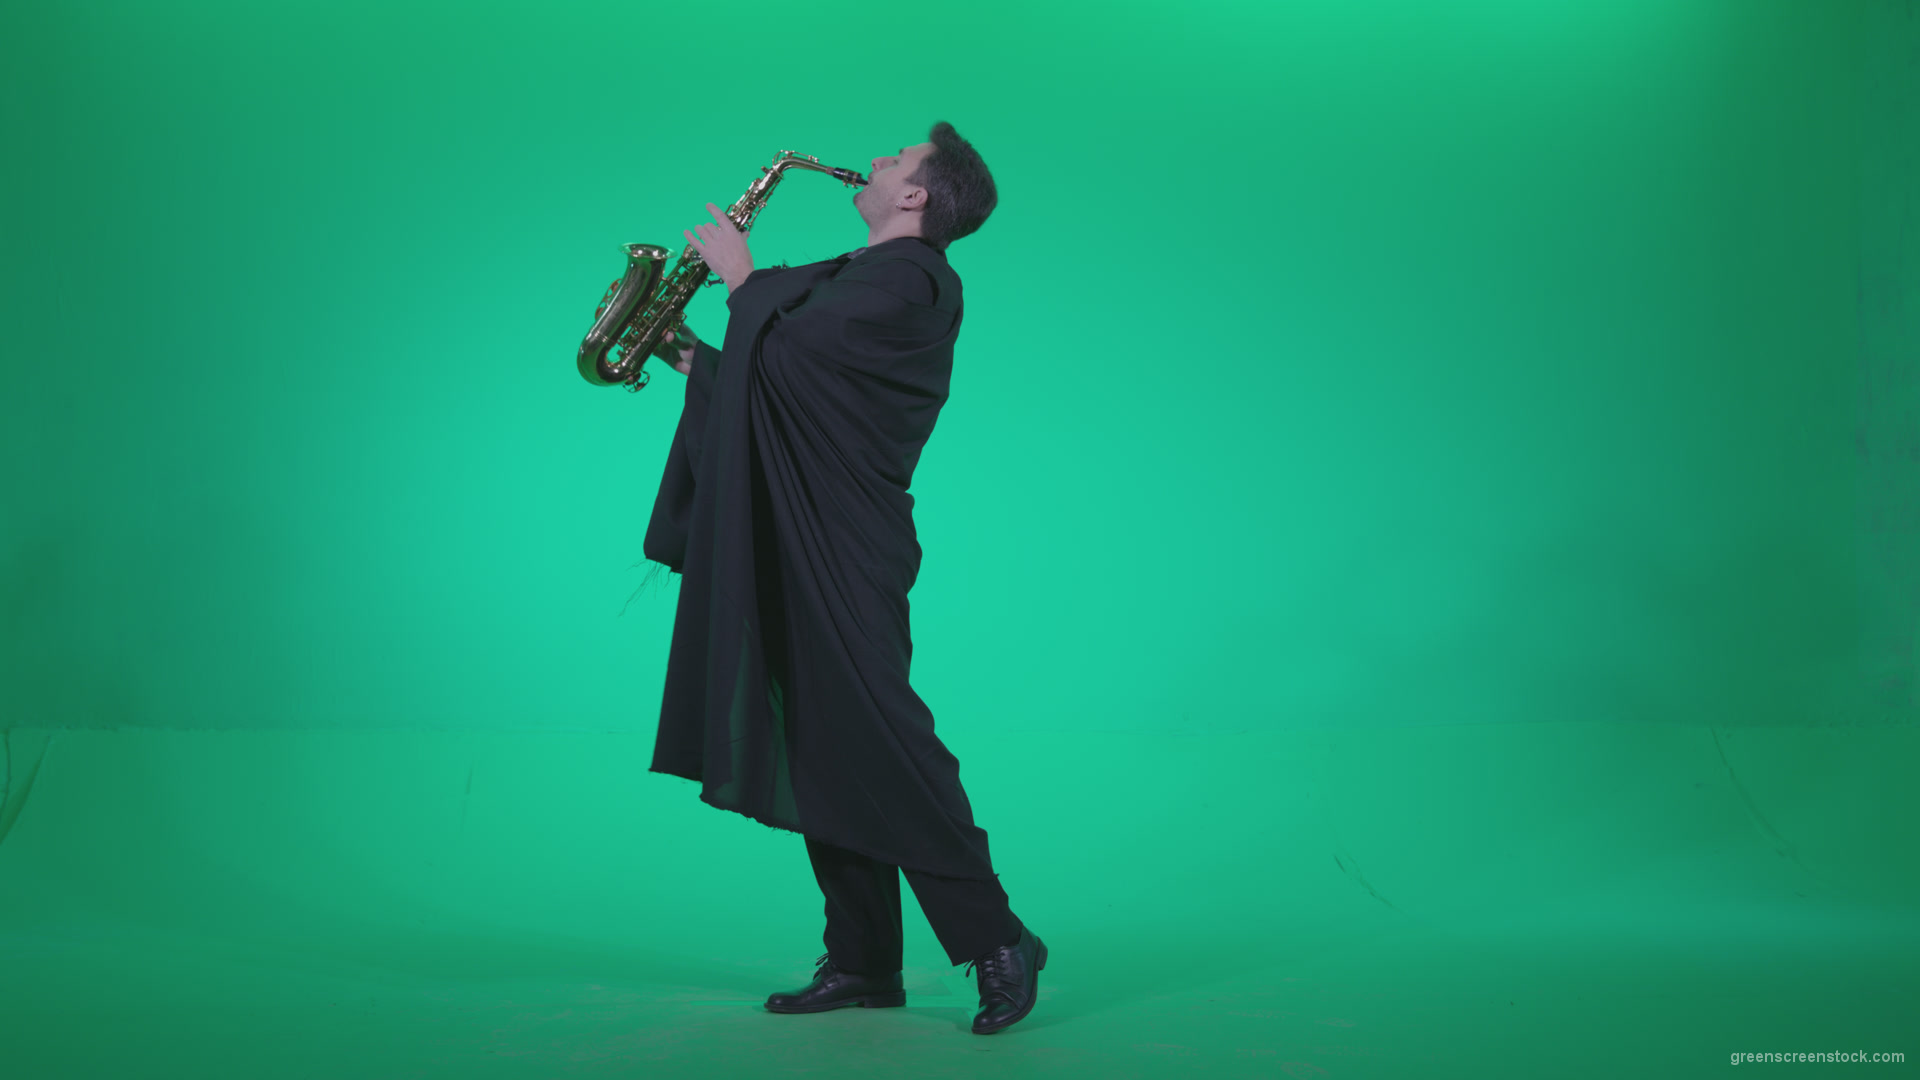 Gothic-Saxophone-Virtuoso-Performer-s3_005 Green Screen Stock